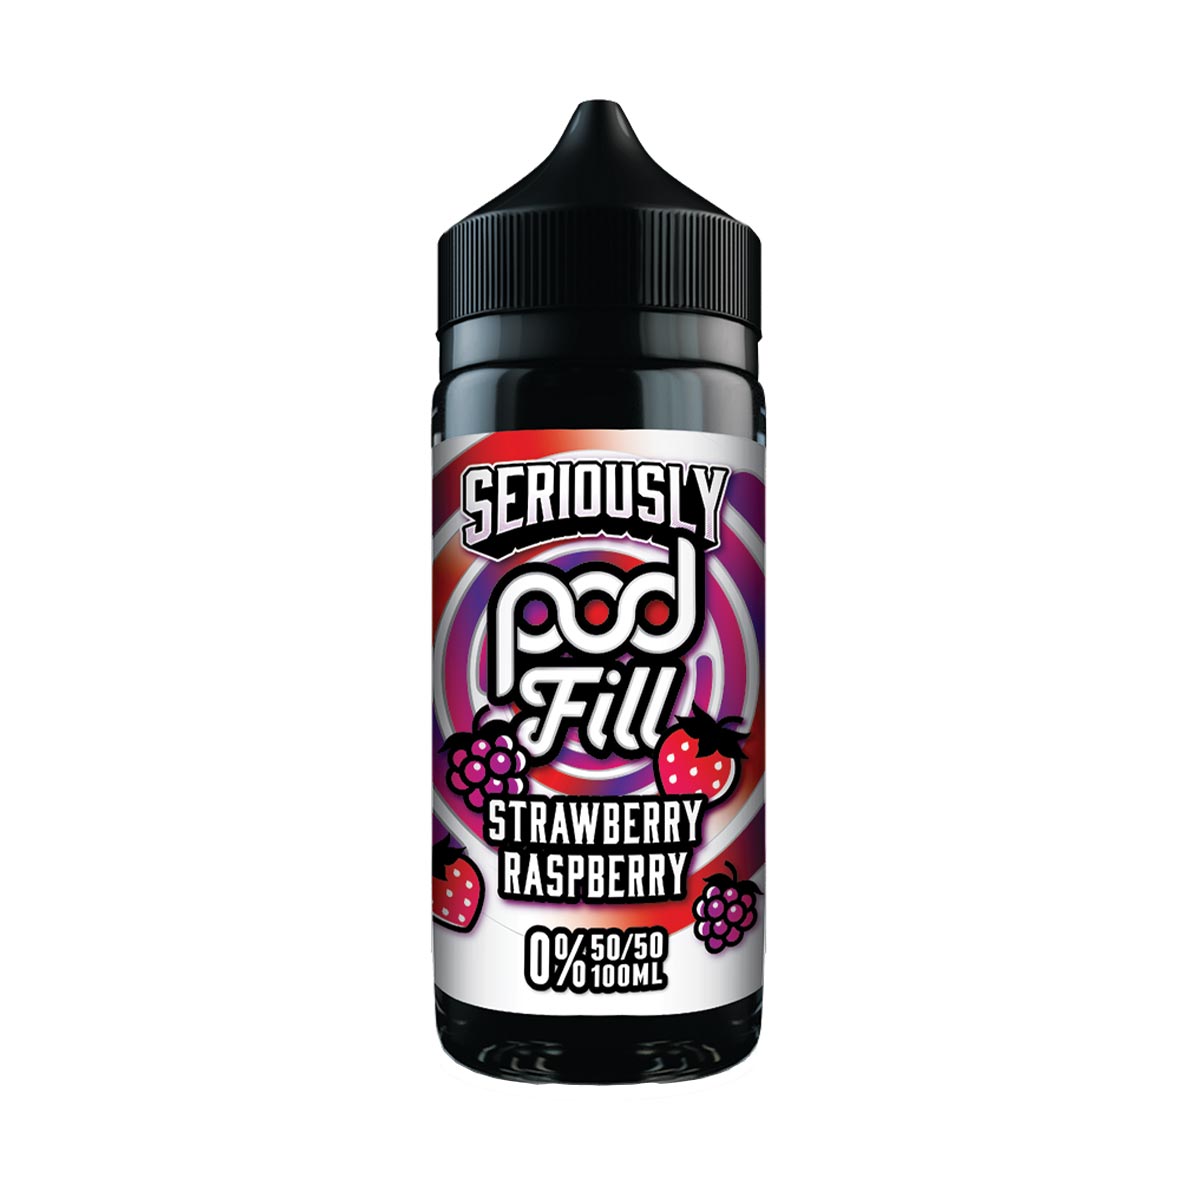 Strawberry Raspberry 50/50 100ml Shortfill by Seriously Pod Fill